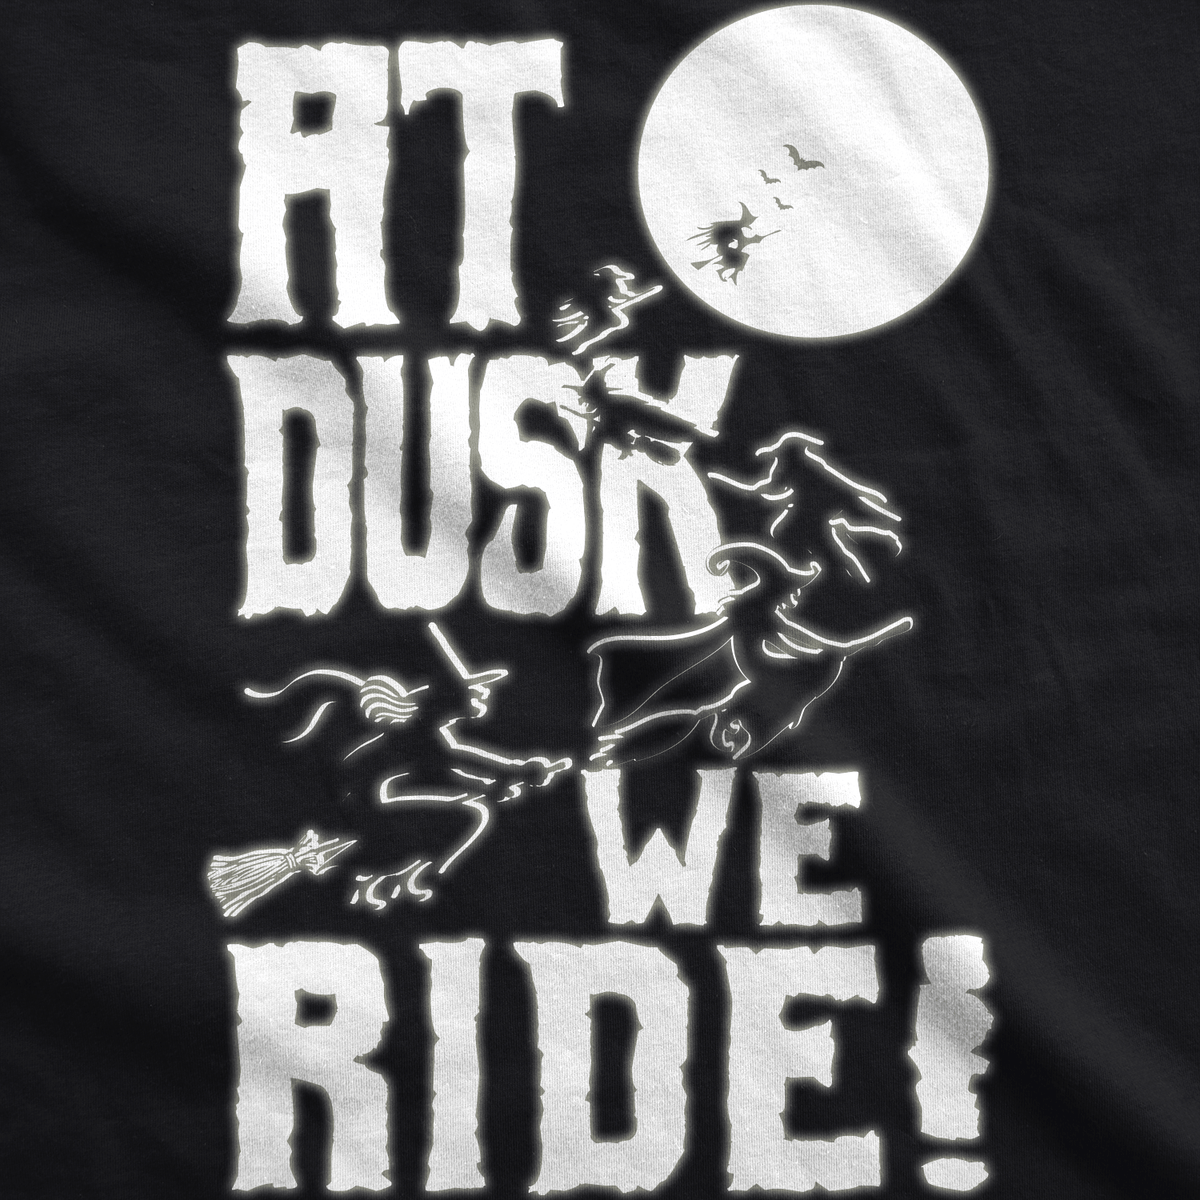 At Dusk We Ride Women&#39;s Tshirt - Crazy Dog T-Shirts